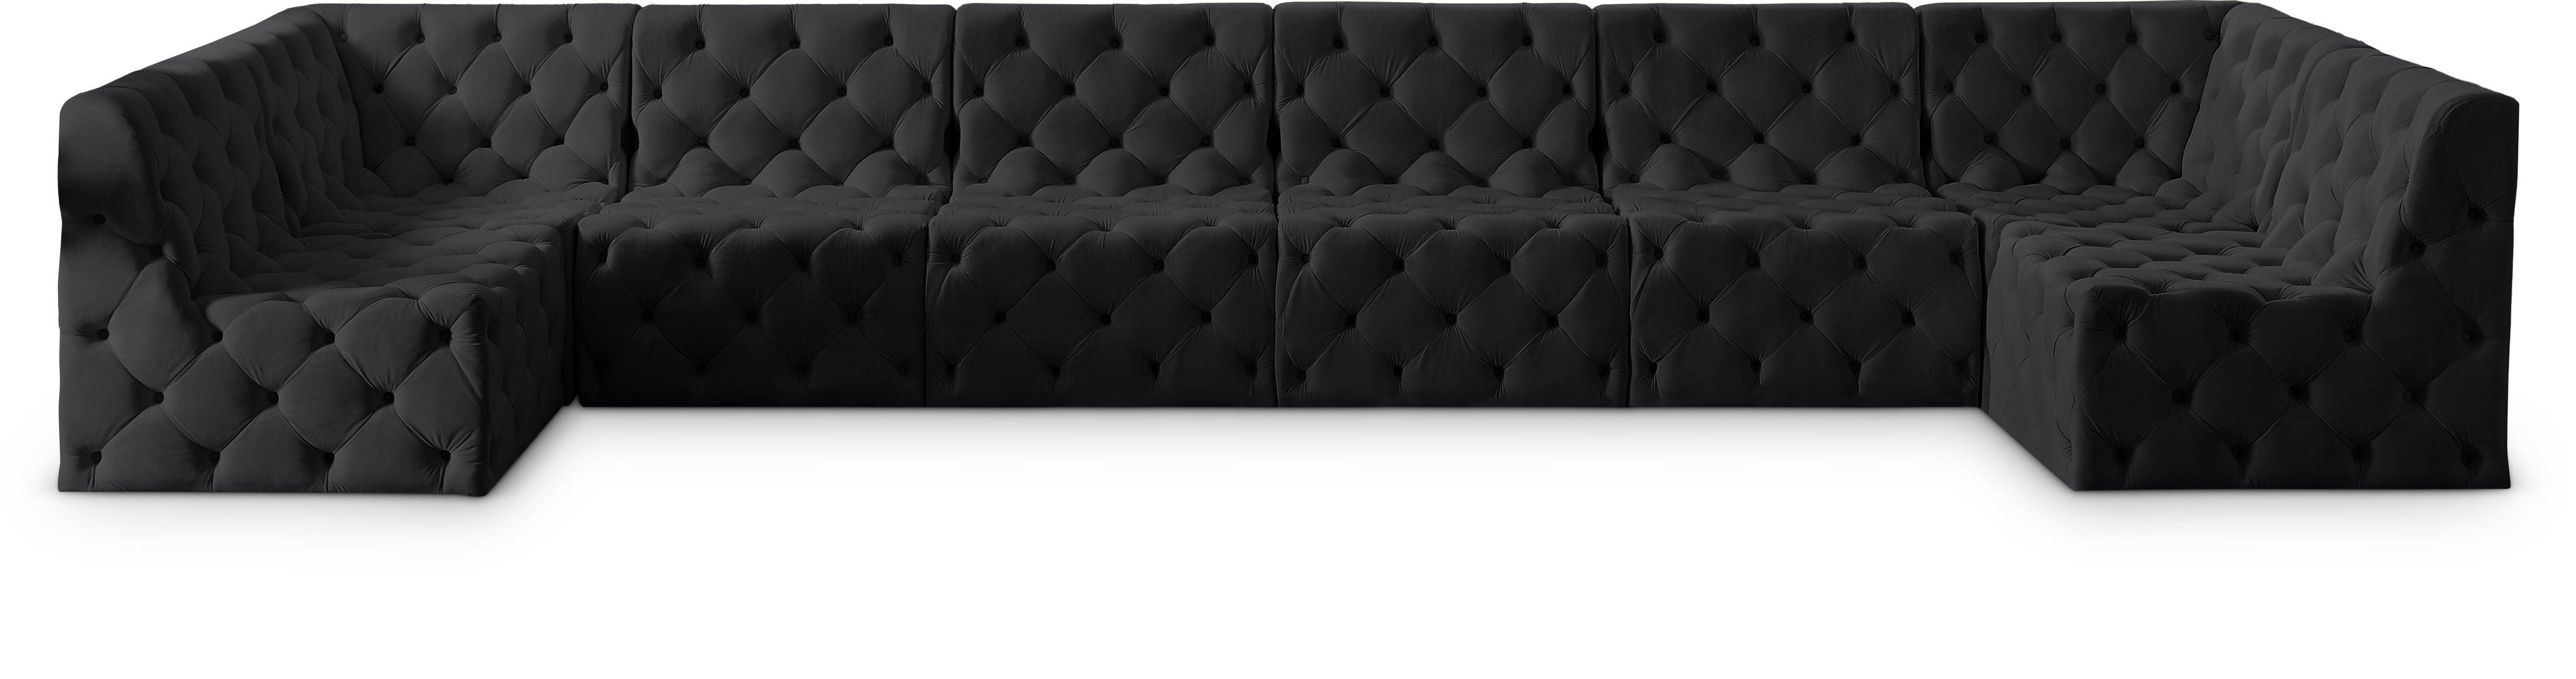 Meridian Furniture - Tuft - Modular Sectional 8 Piece - Black - Modern & Contemporary - 5th Avenue Furniture